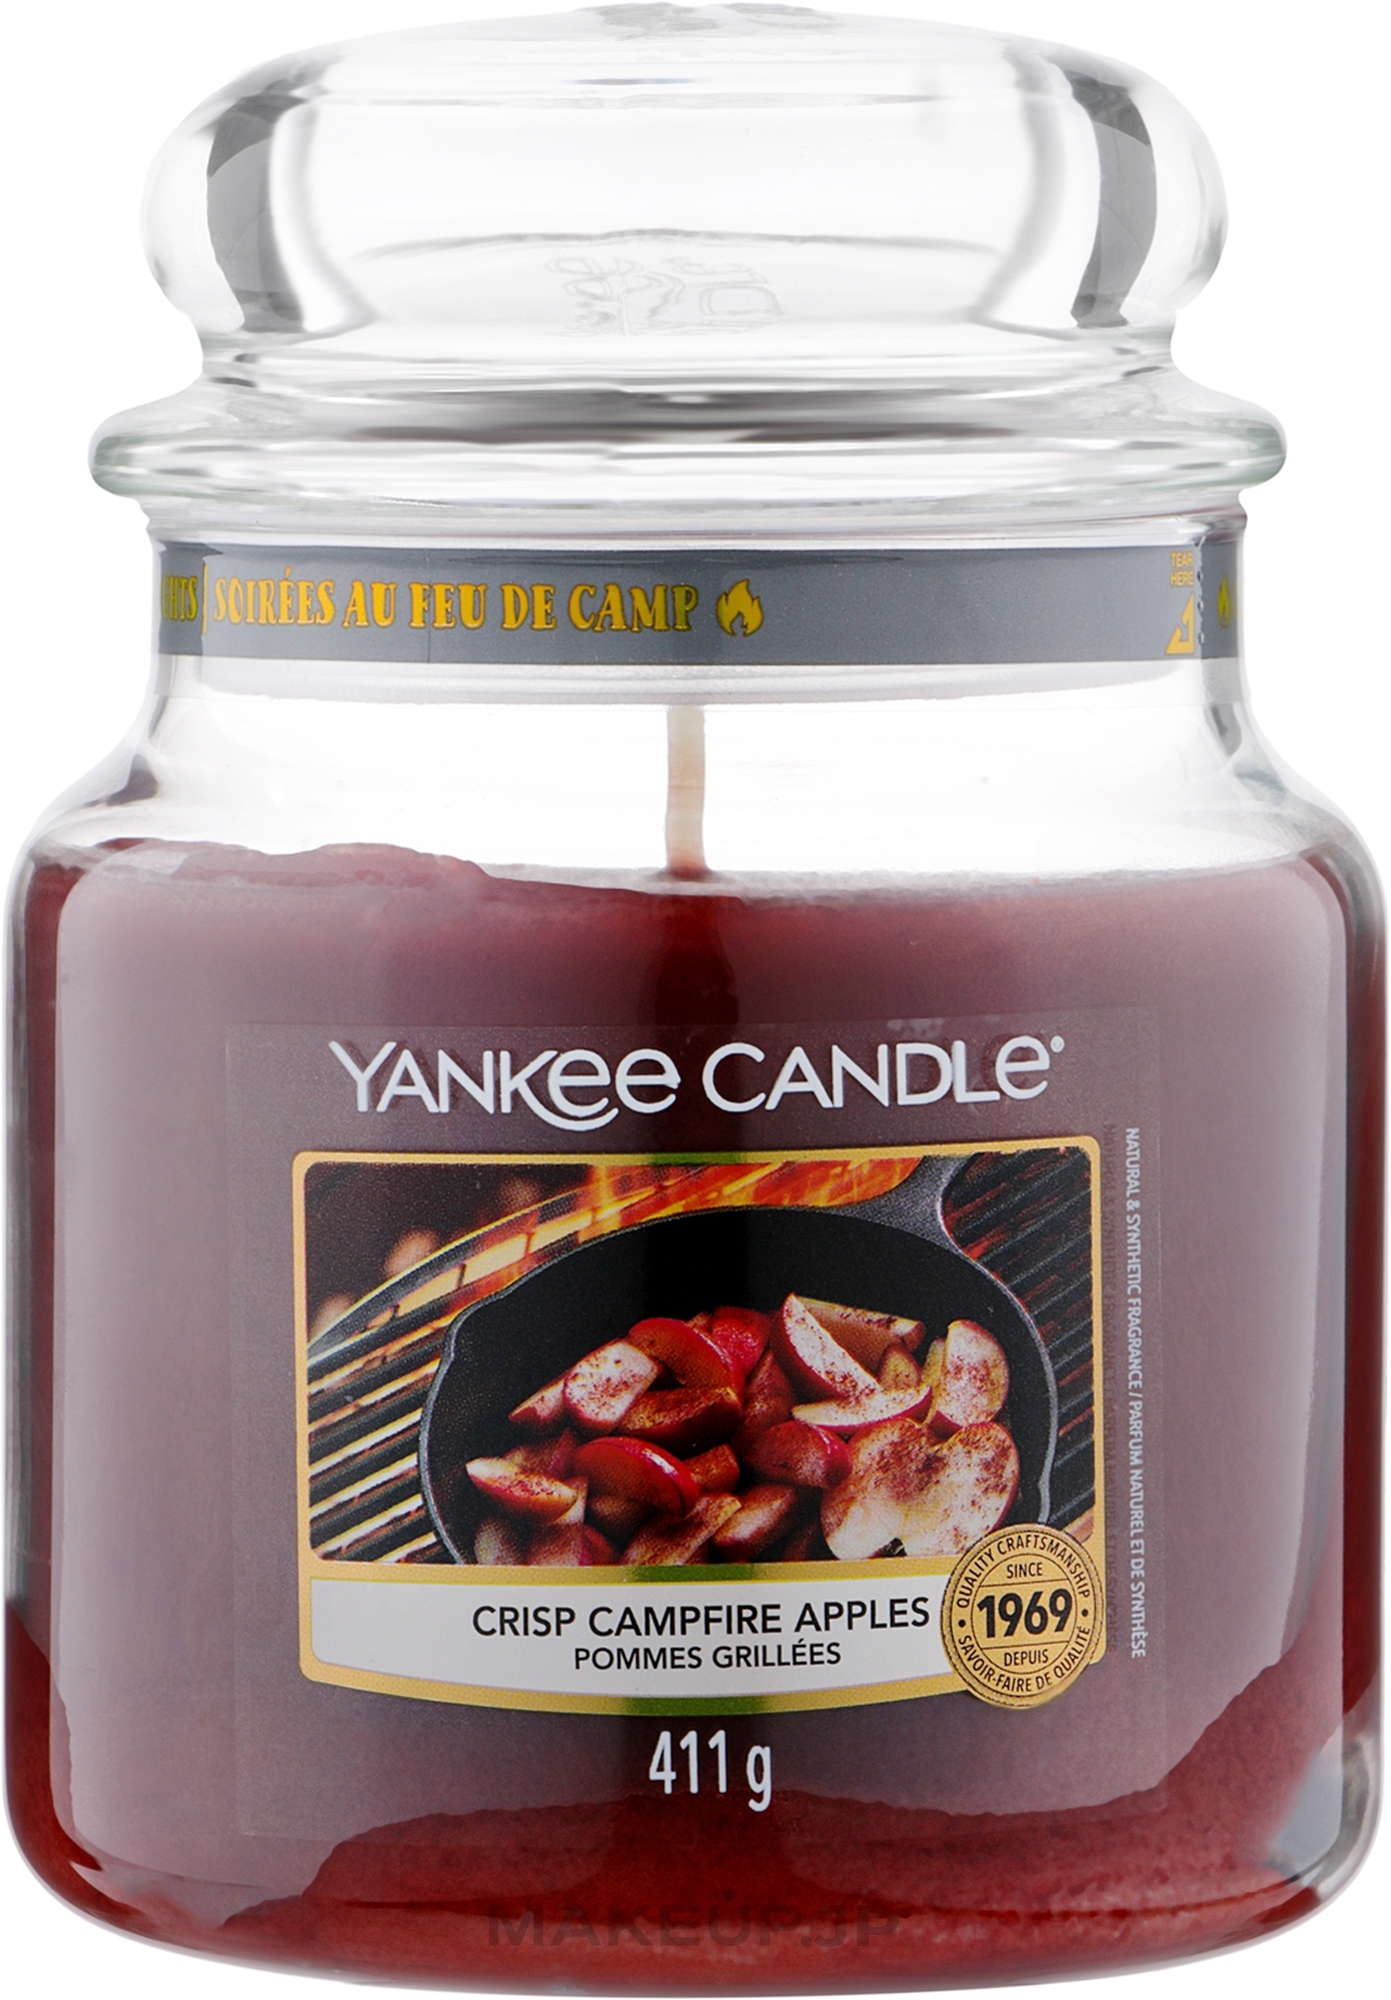 Scented Candle in Jar "Crisp Campfire Apples" - Yankee Candle Crisp Campfire Apples — photo 411 g